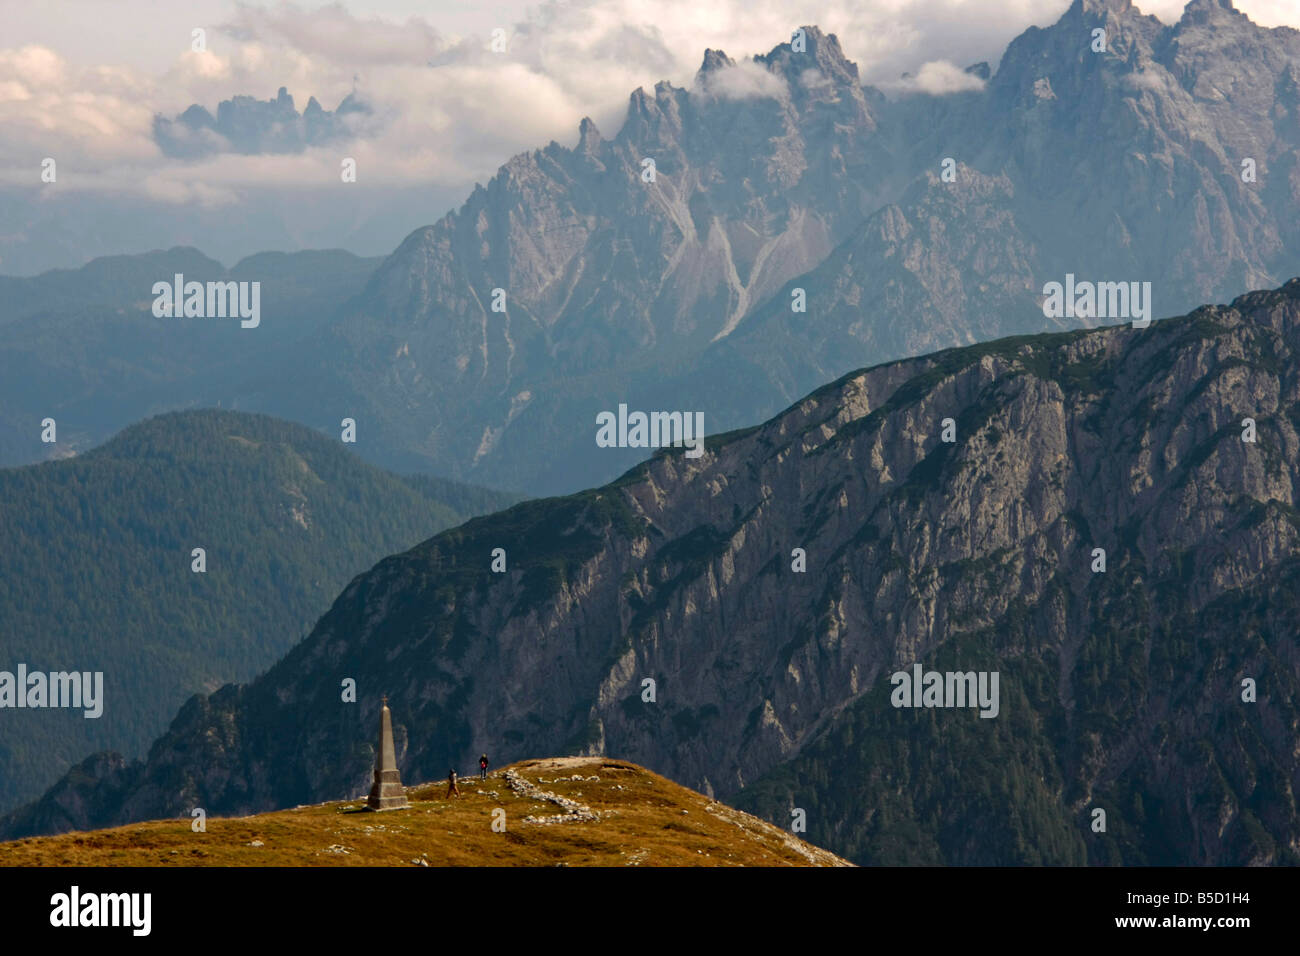 the Sexten Dolomites around the Tre Cime di Lavaredo or three peaks of Lavaredo near Toblach in northeastern Italy Stock Photo